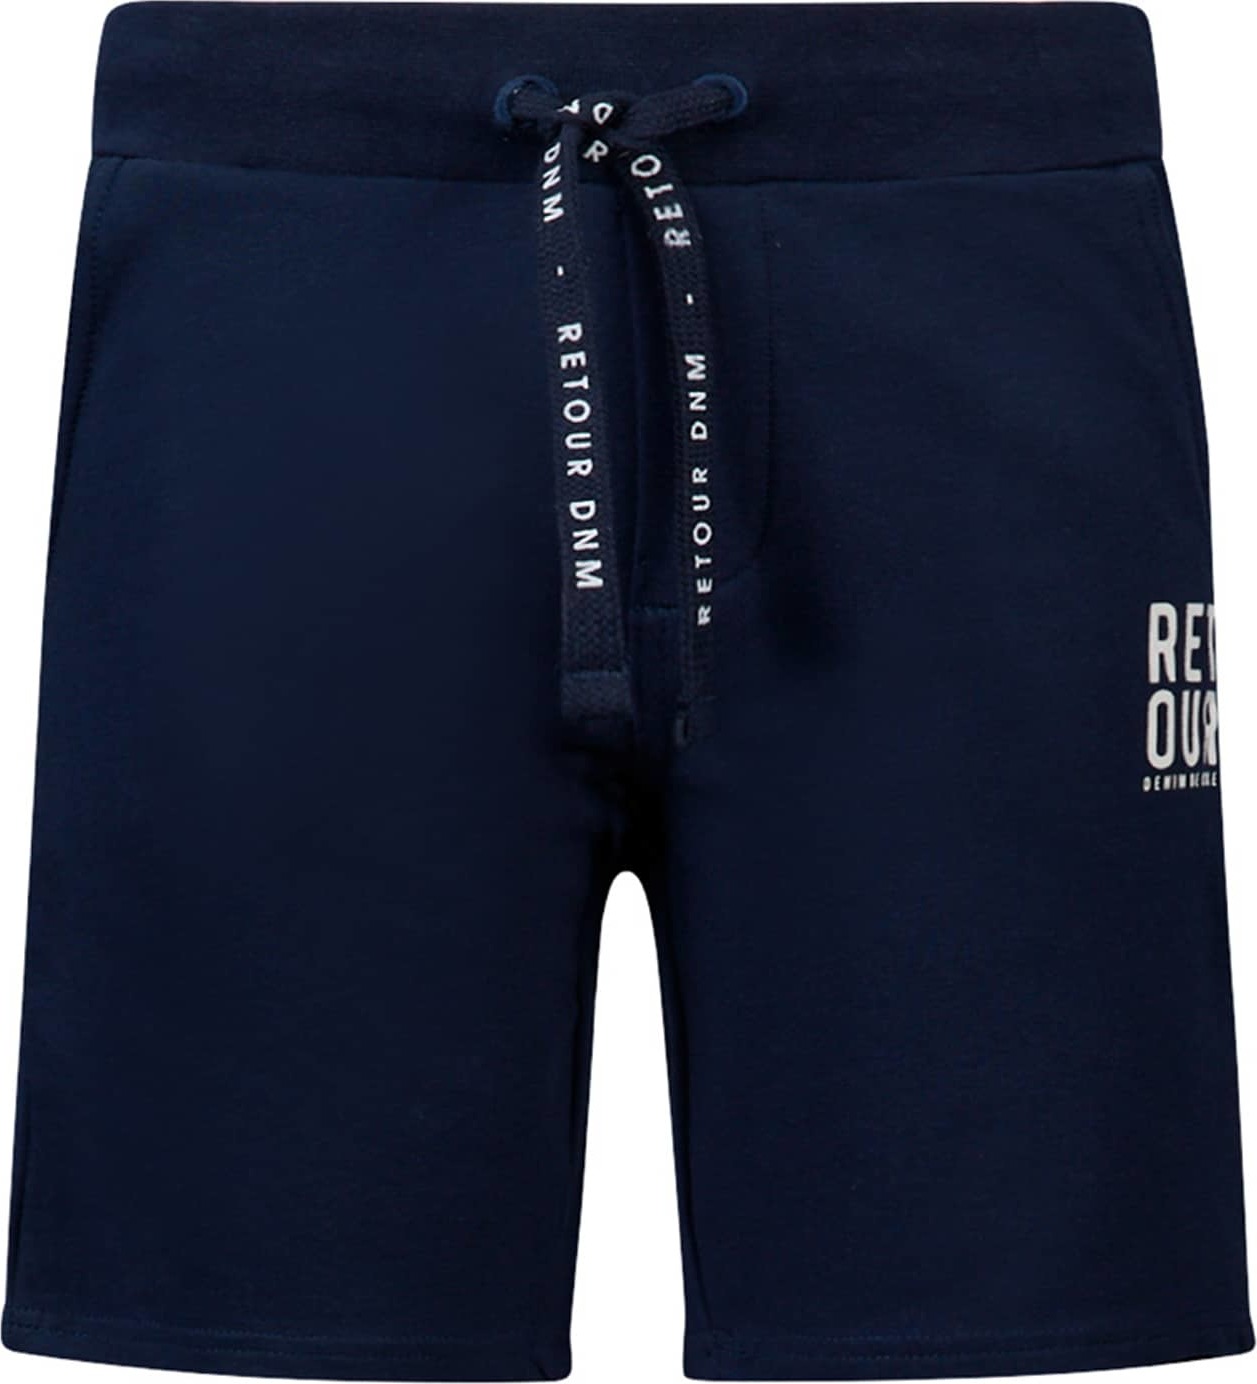 Retour Jeans Kalhoty 'Maxim' námořnická modř / offwhite